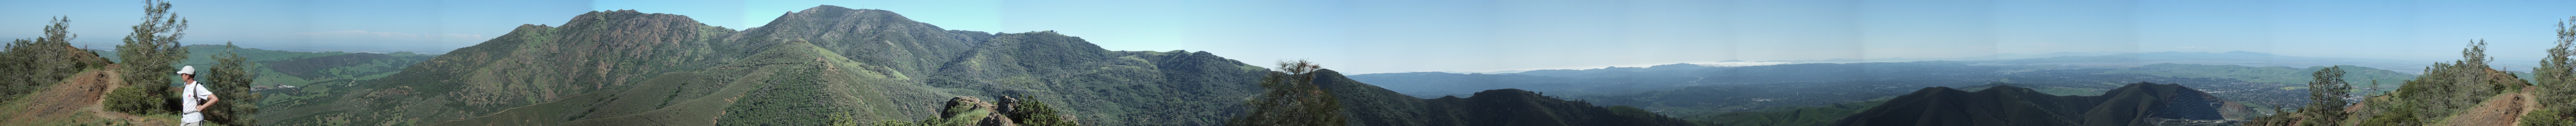 Eagle Peak Panorama - 4/2012